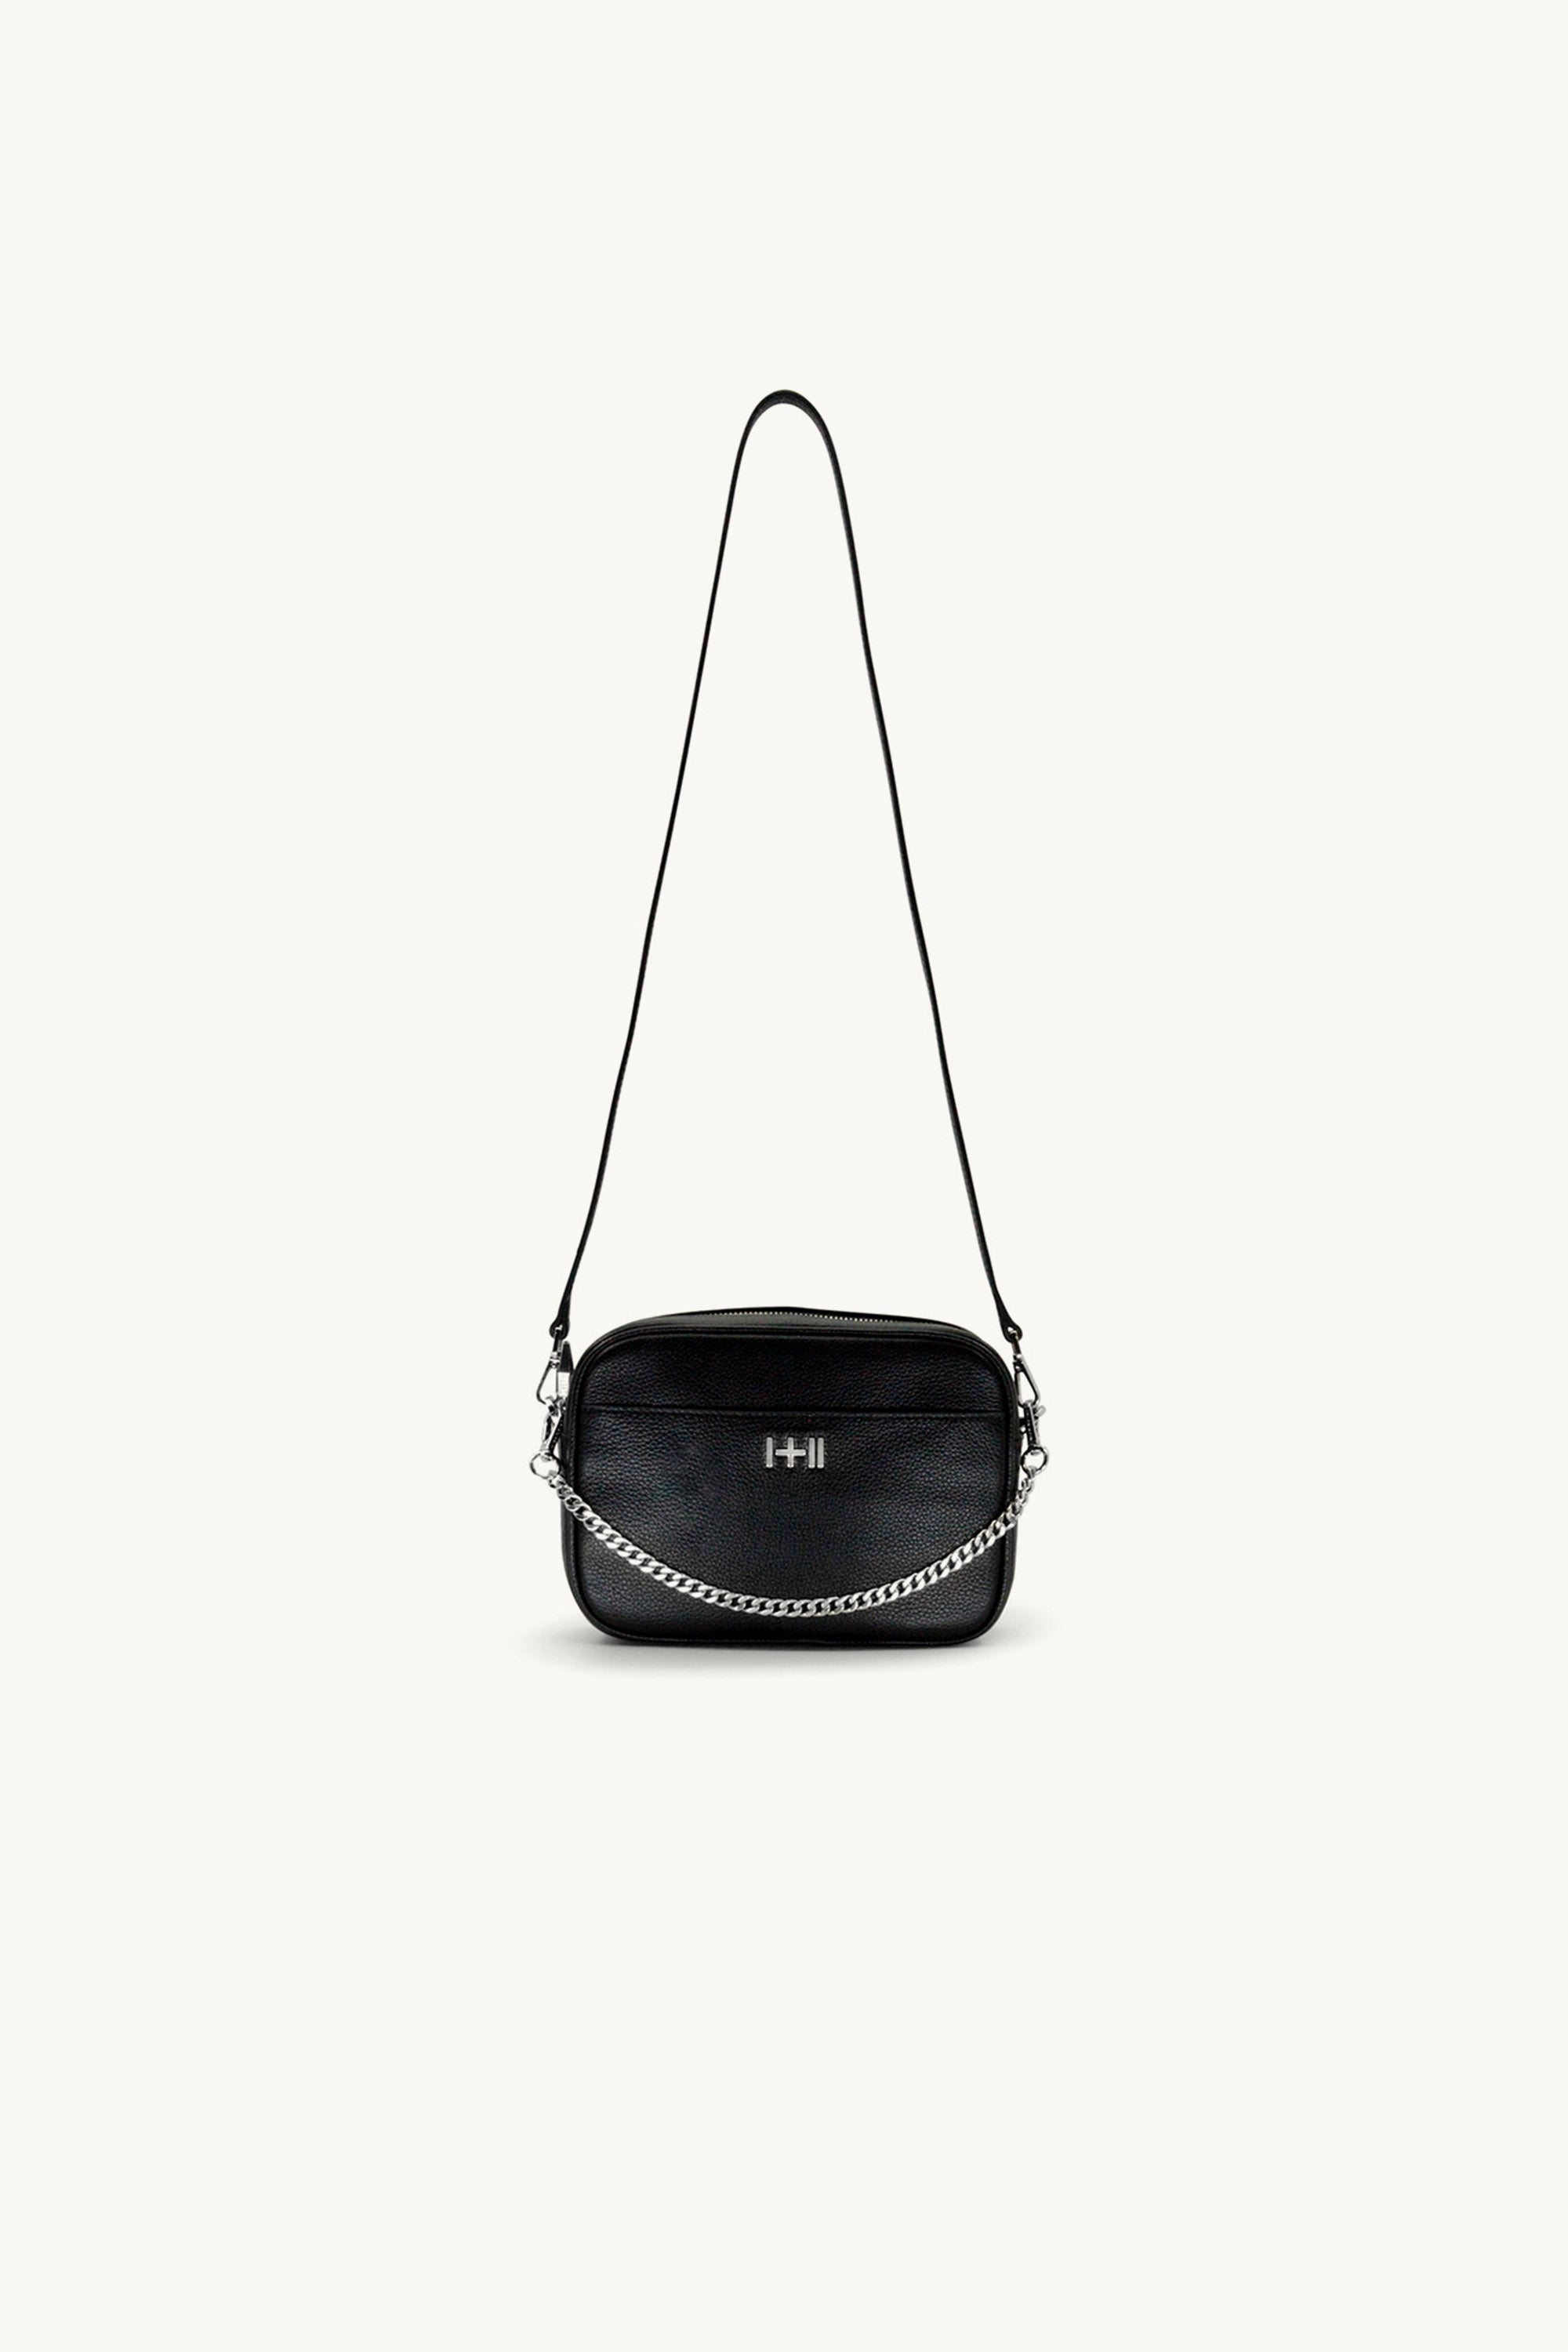 Shop Italian Leather Handbags | Dylan Kain